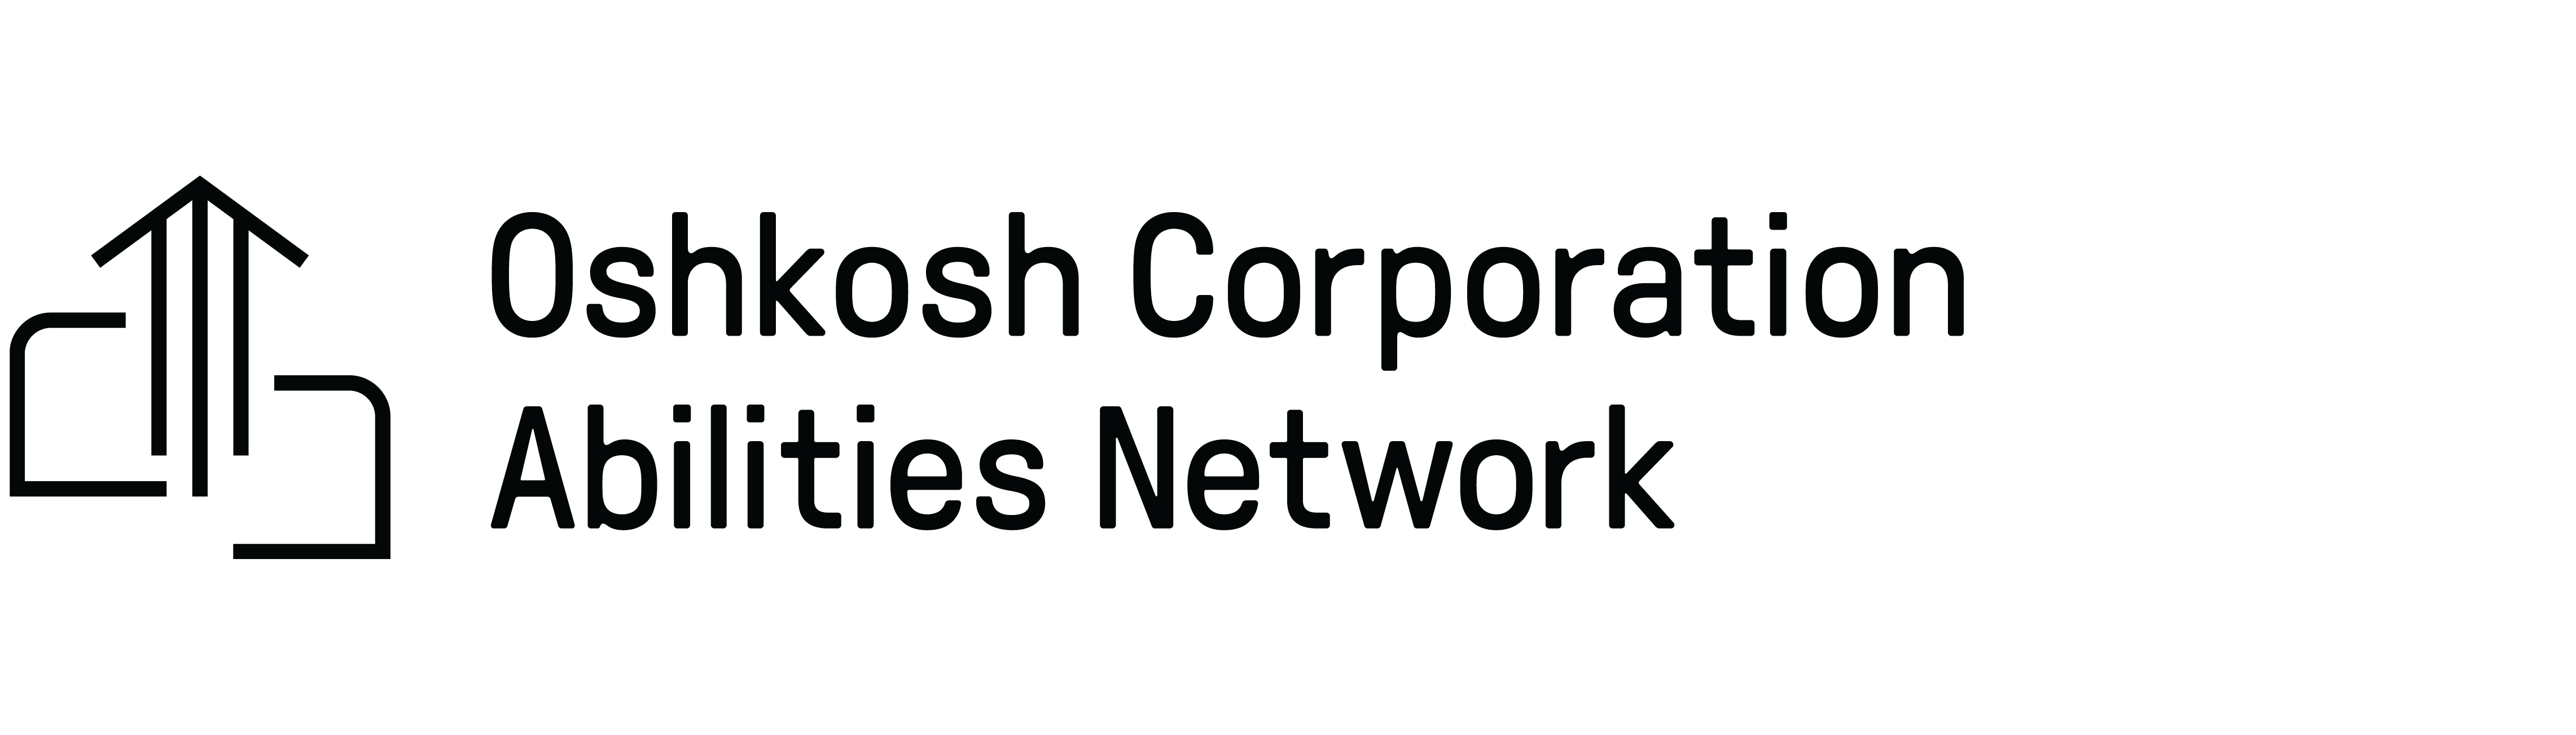 Black Oshkosh Corporation Abilities Network logo